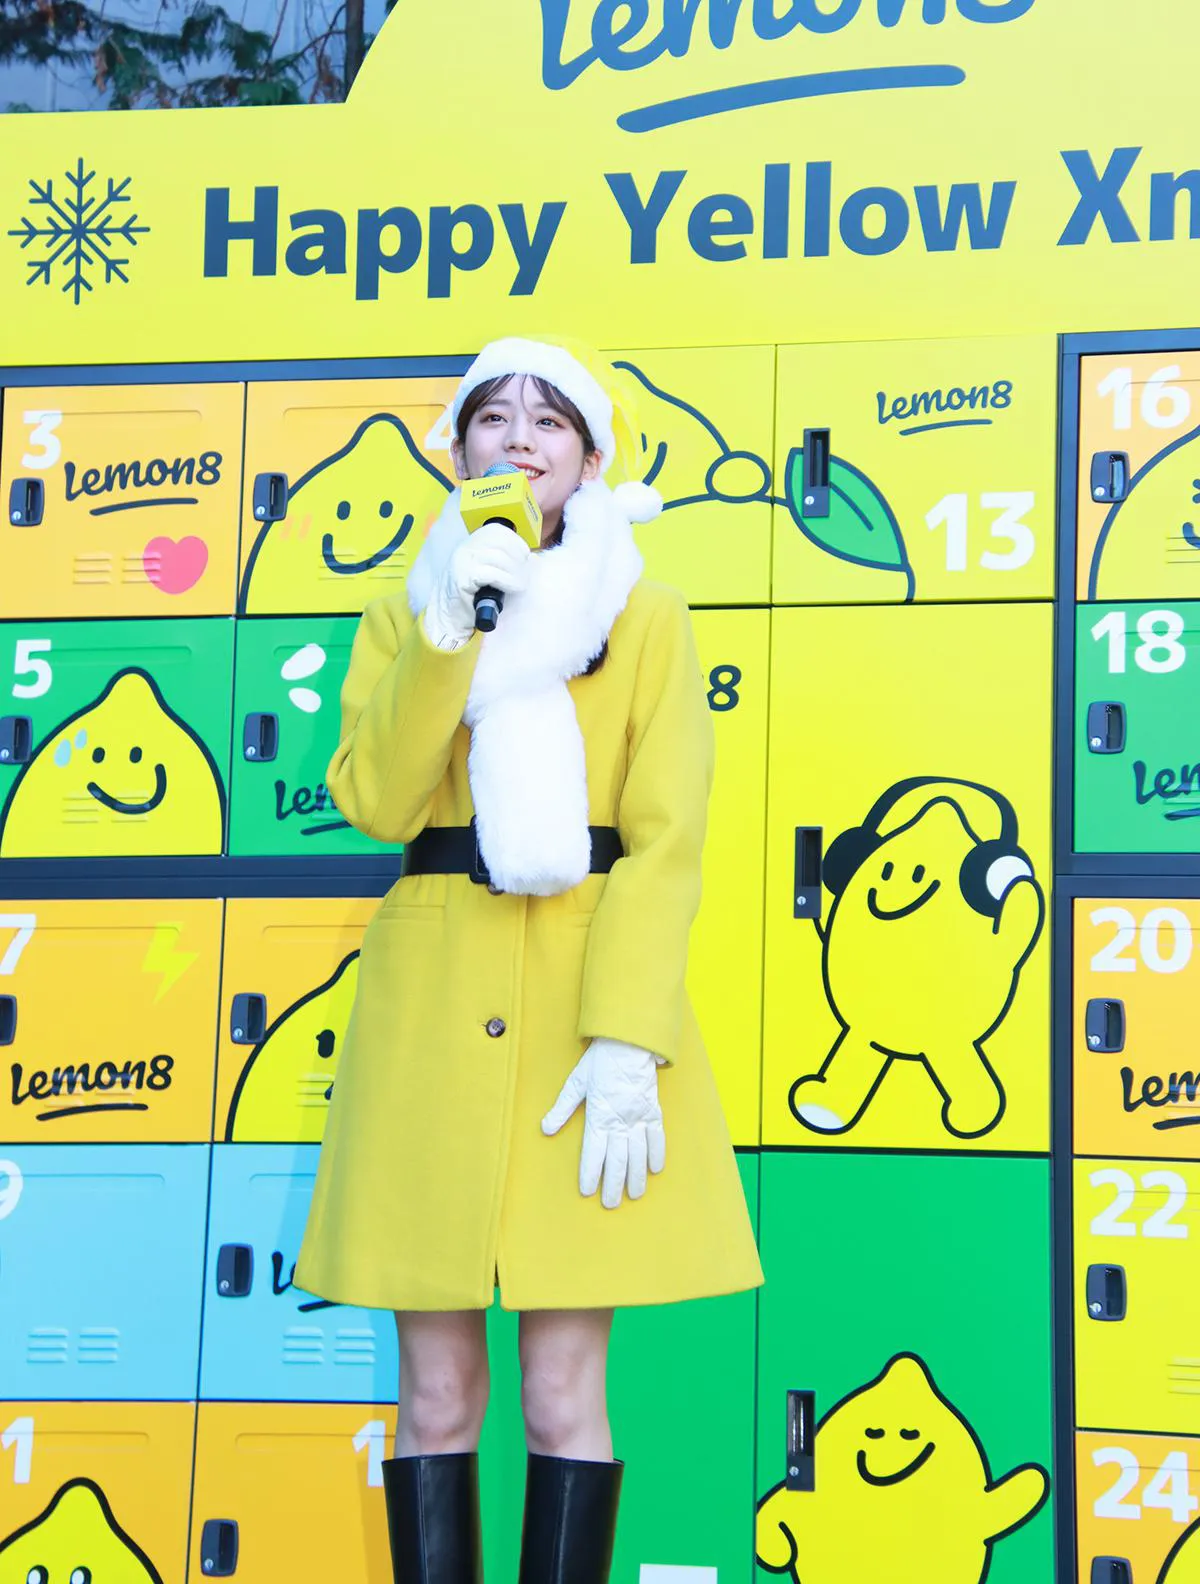 「Lemon8 Happy Yellow Xmas」オープニングイベントより